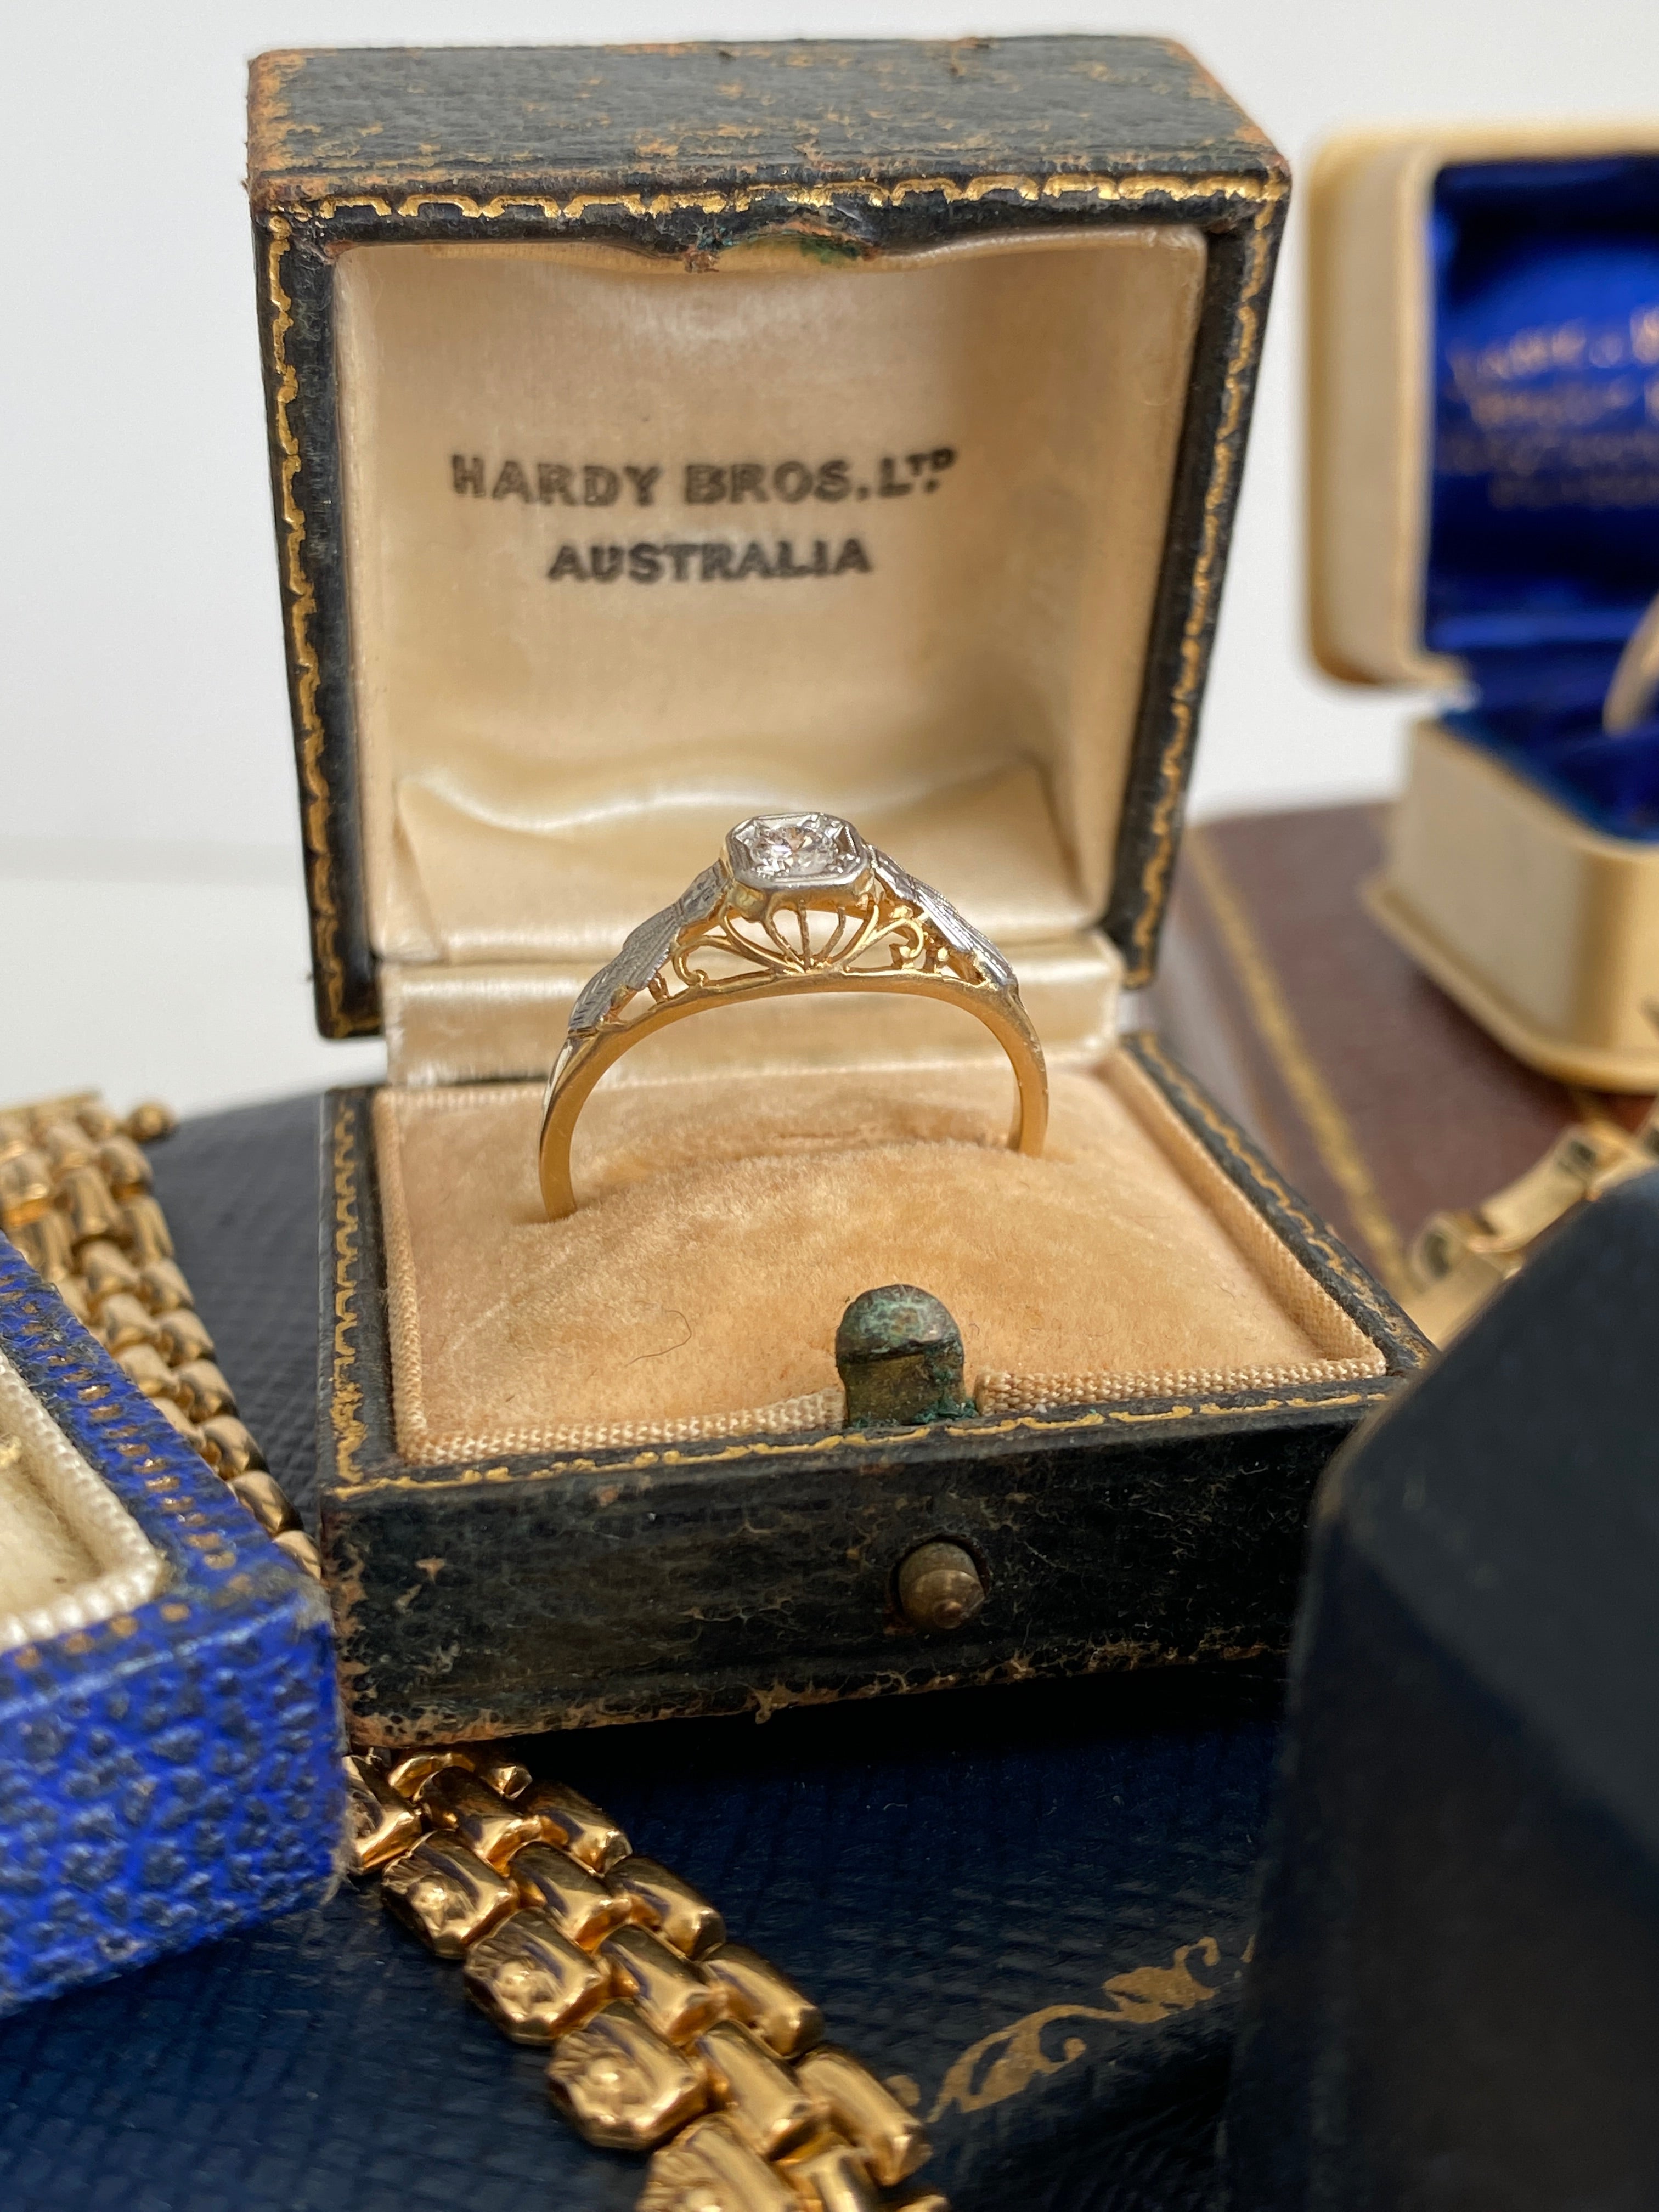 Art Deco Style 5.11 Carat Black Opal and Diamond Ring